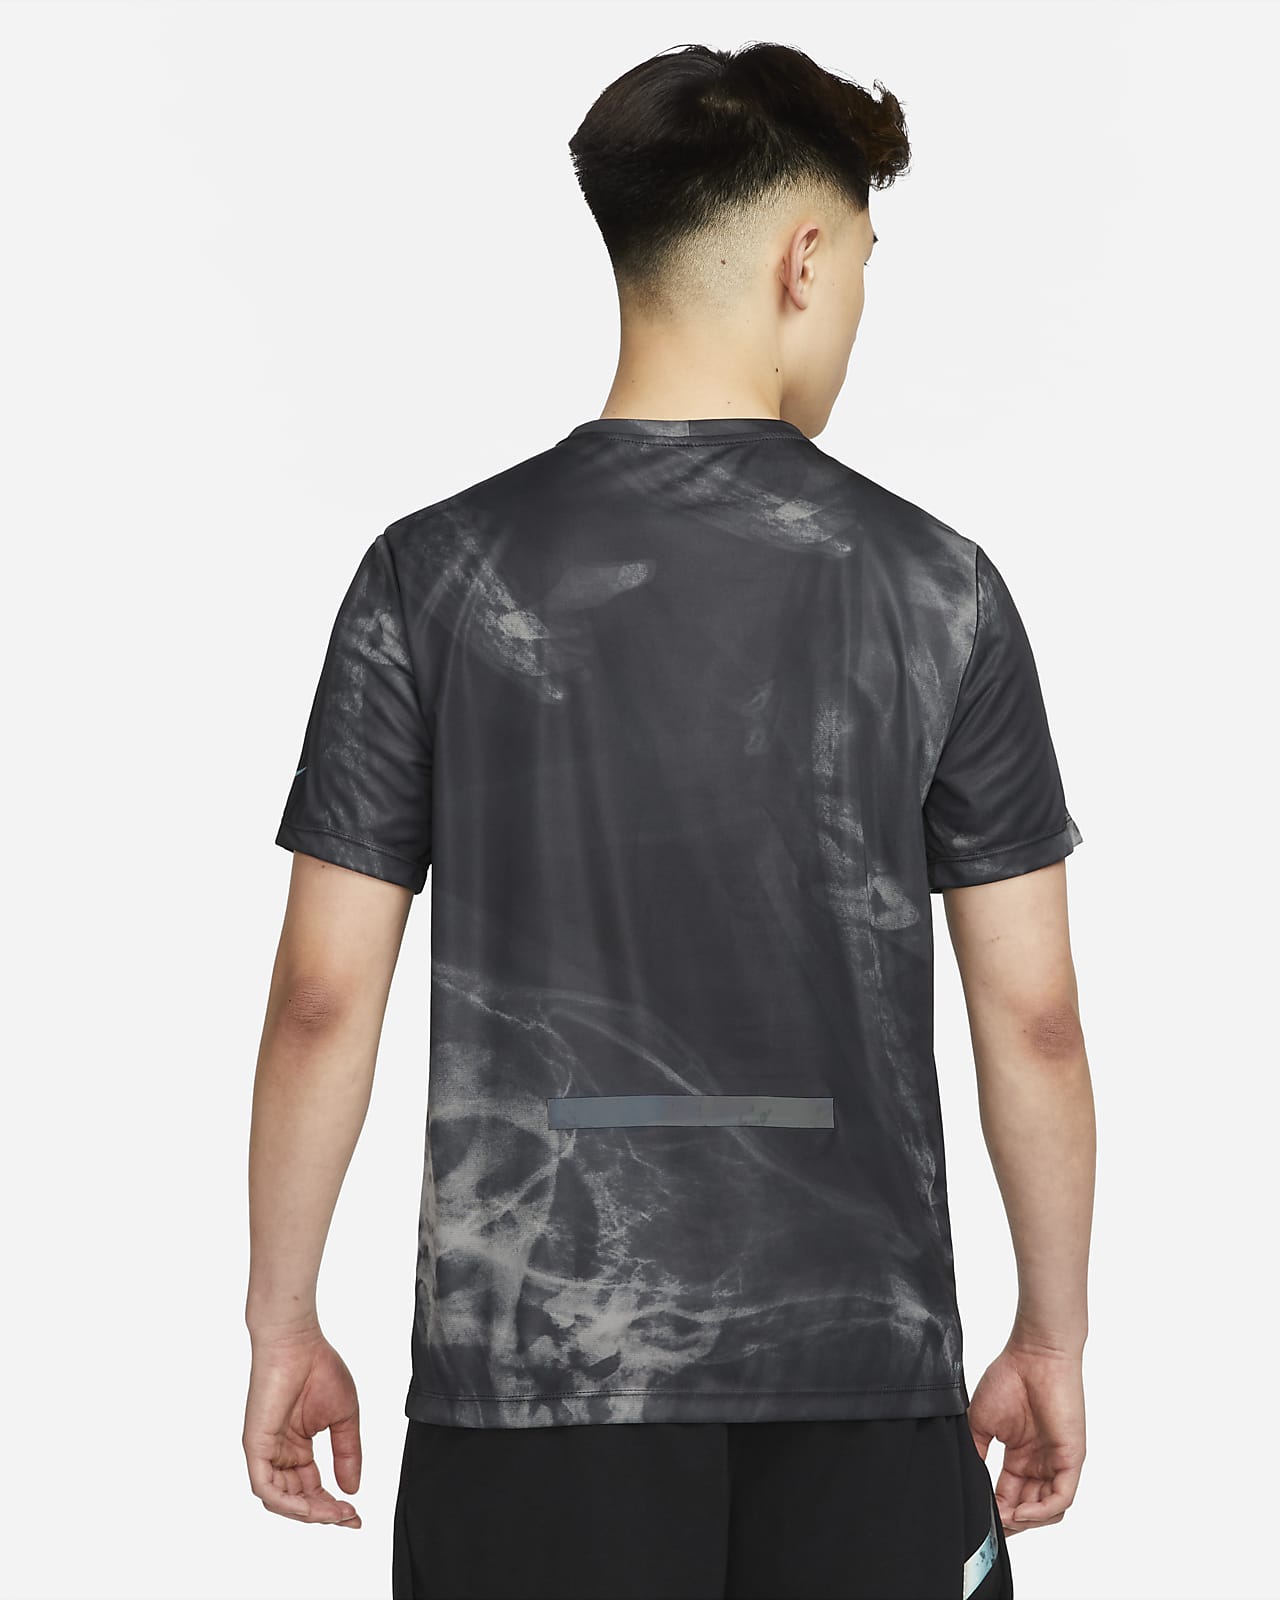 NIKE「 ライズ 365 ラン ディビジョン ランニングシャツ 」